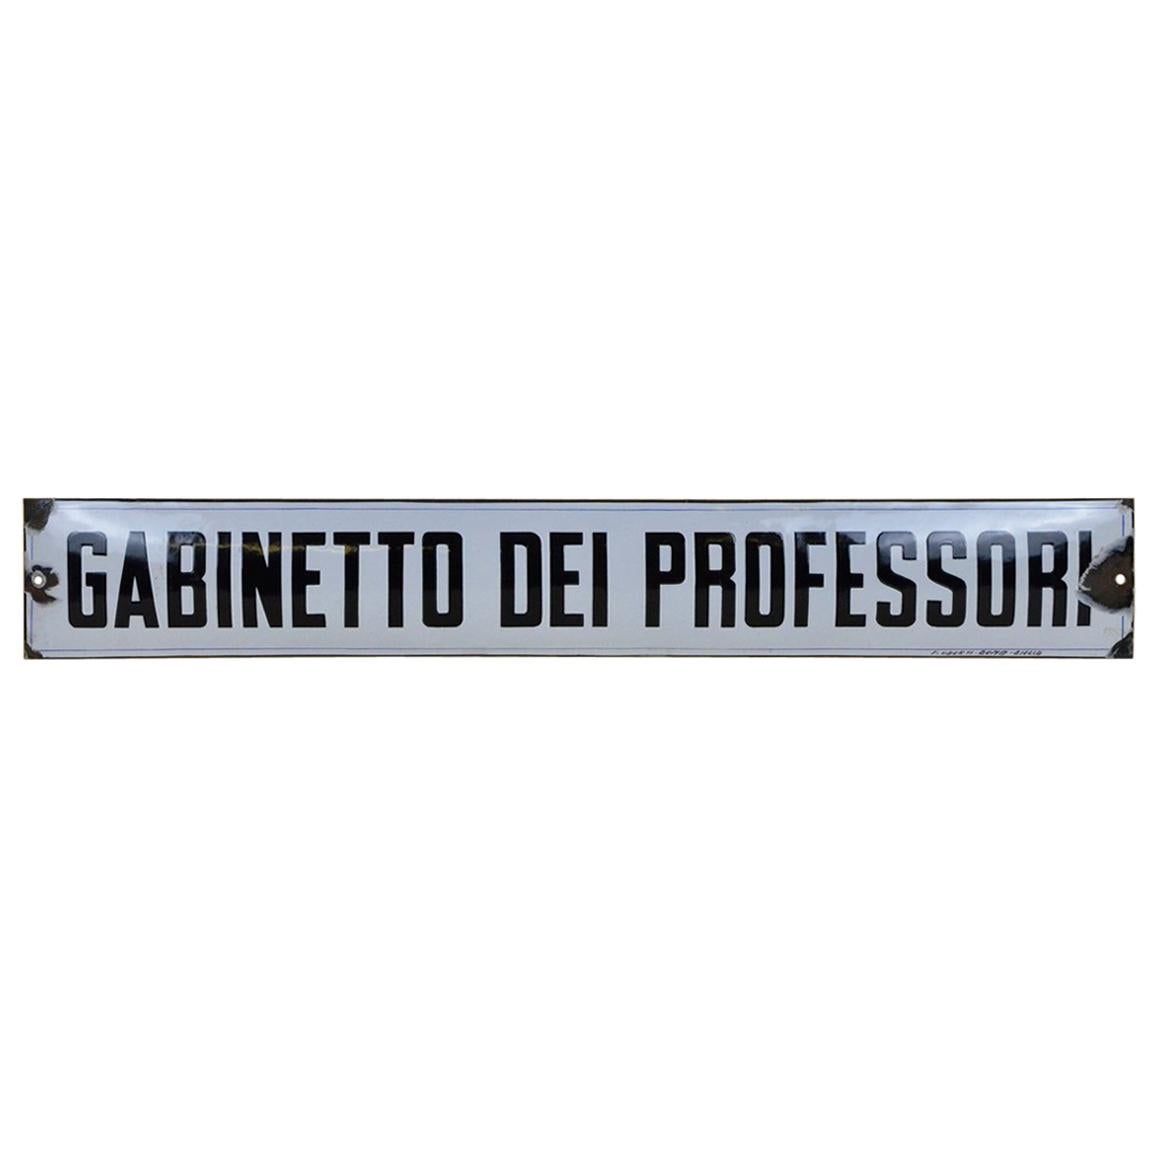 1930s Italian Enamel Metal Sign "Gabinetto Dei Professori", Teachers's Restroom